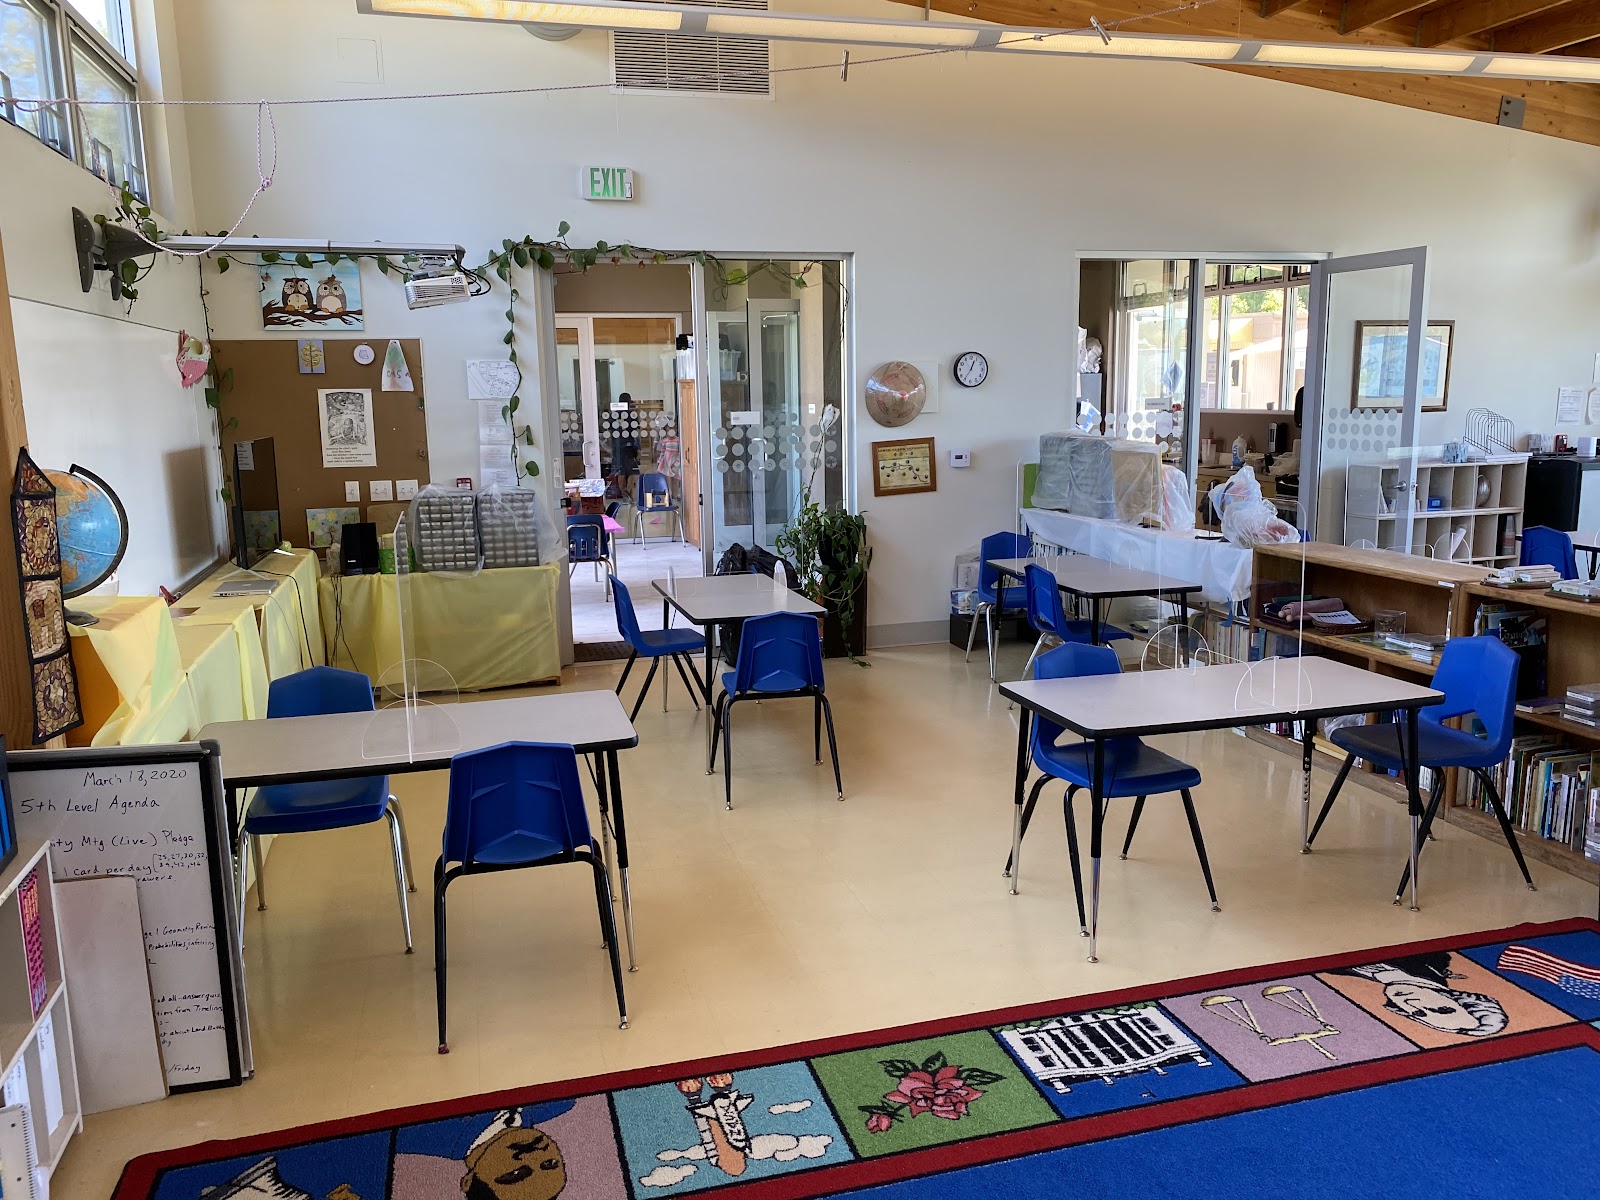 Country Montessori School